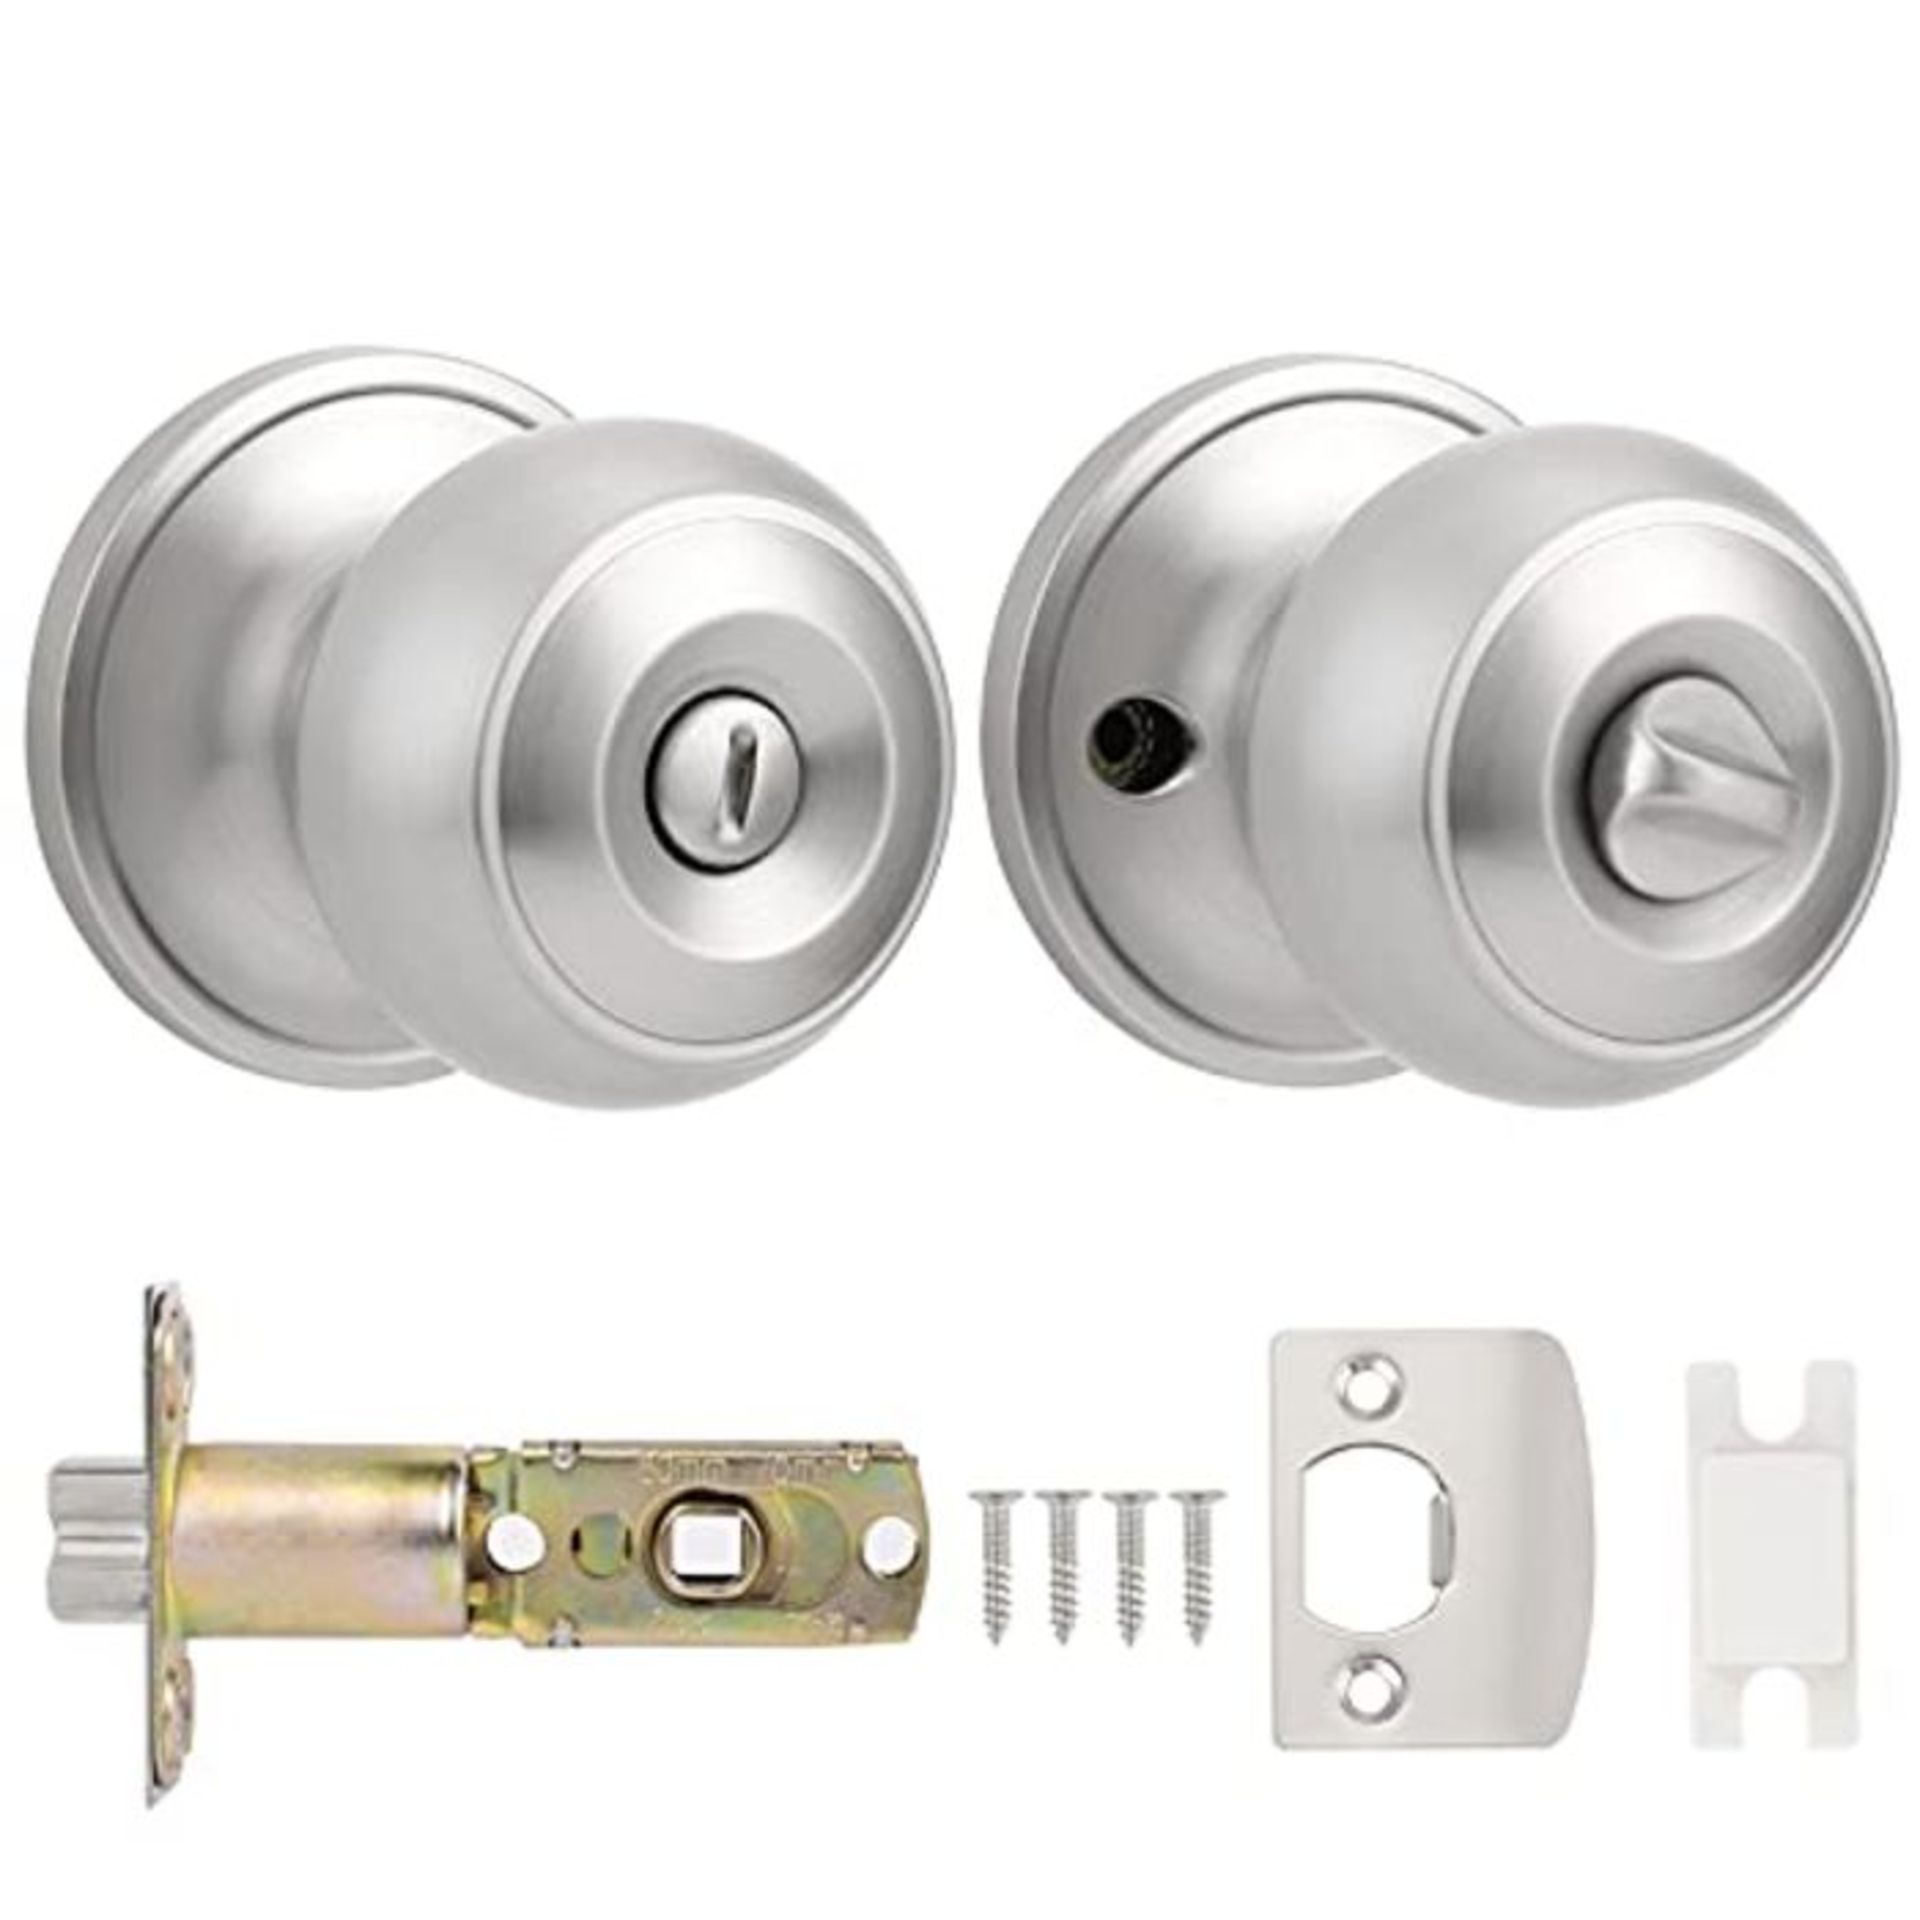 Probrico Stainless Steel Lock Set, Privacy Keyless Interior Door Knobs for Bedroom